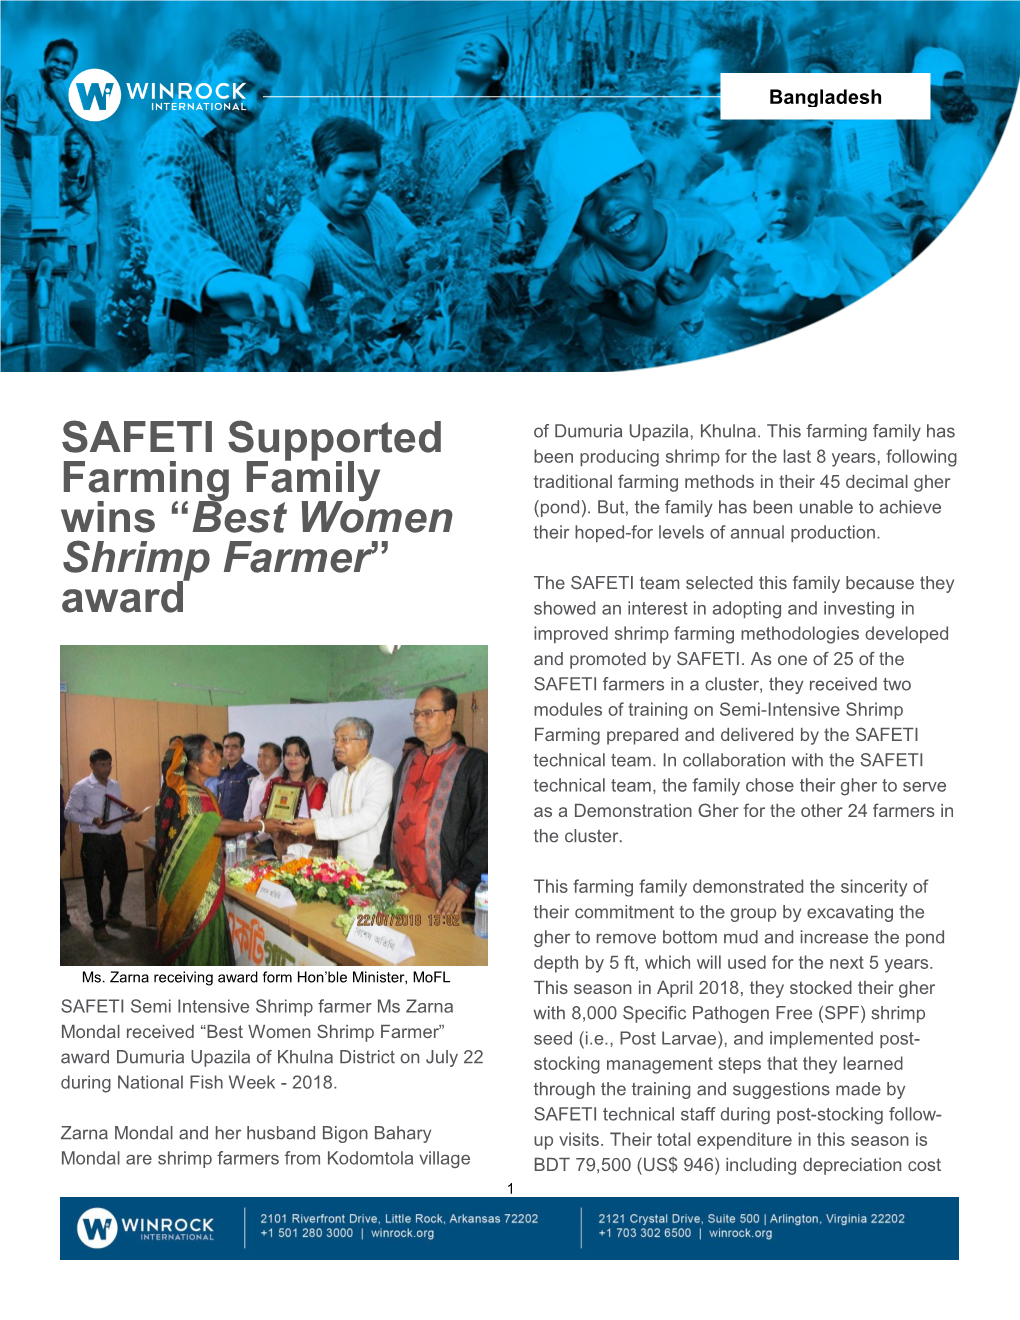 SAFETI Supported Farming Family Wins “Best Women Shrimp Farmer” Award